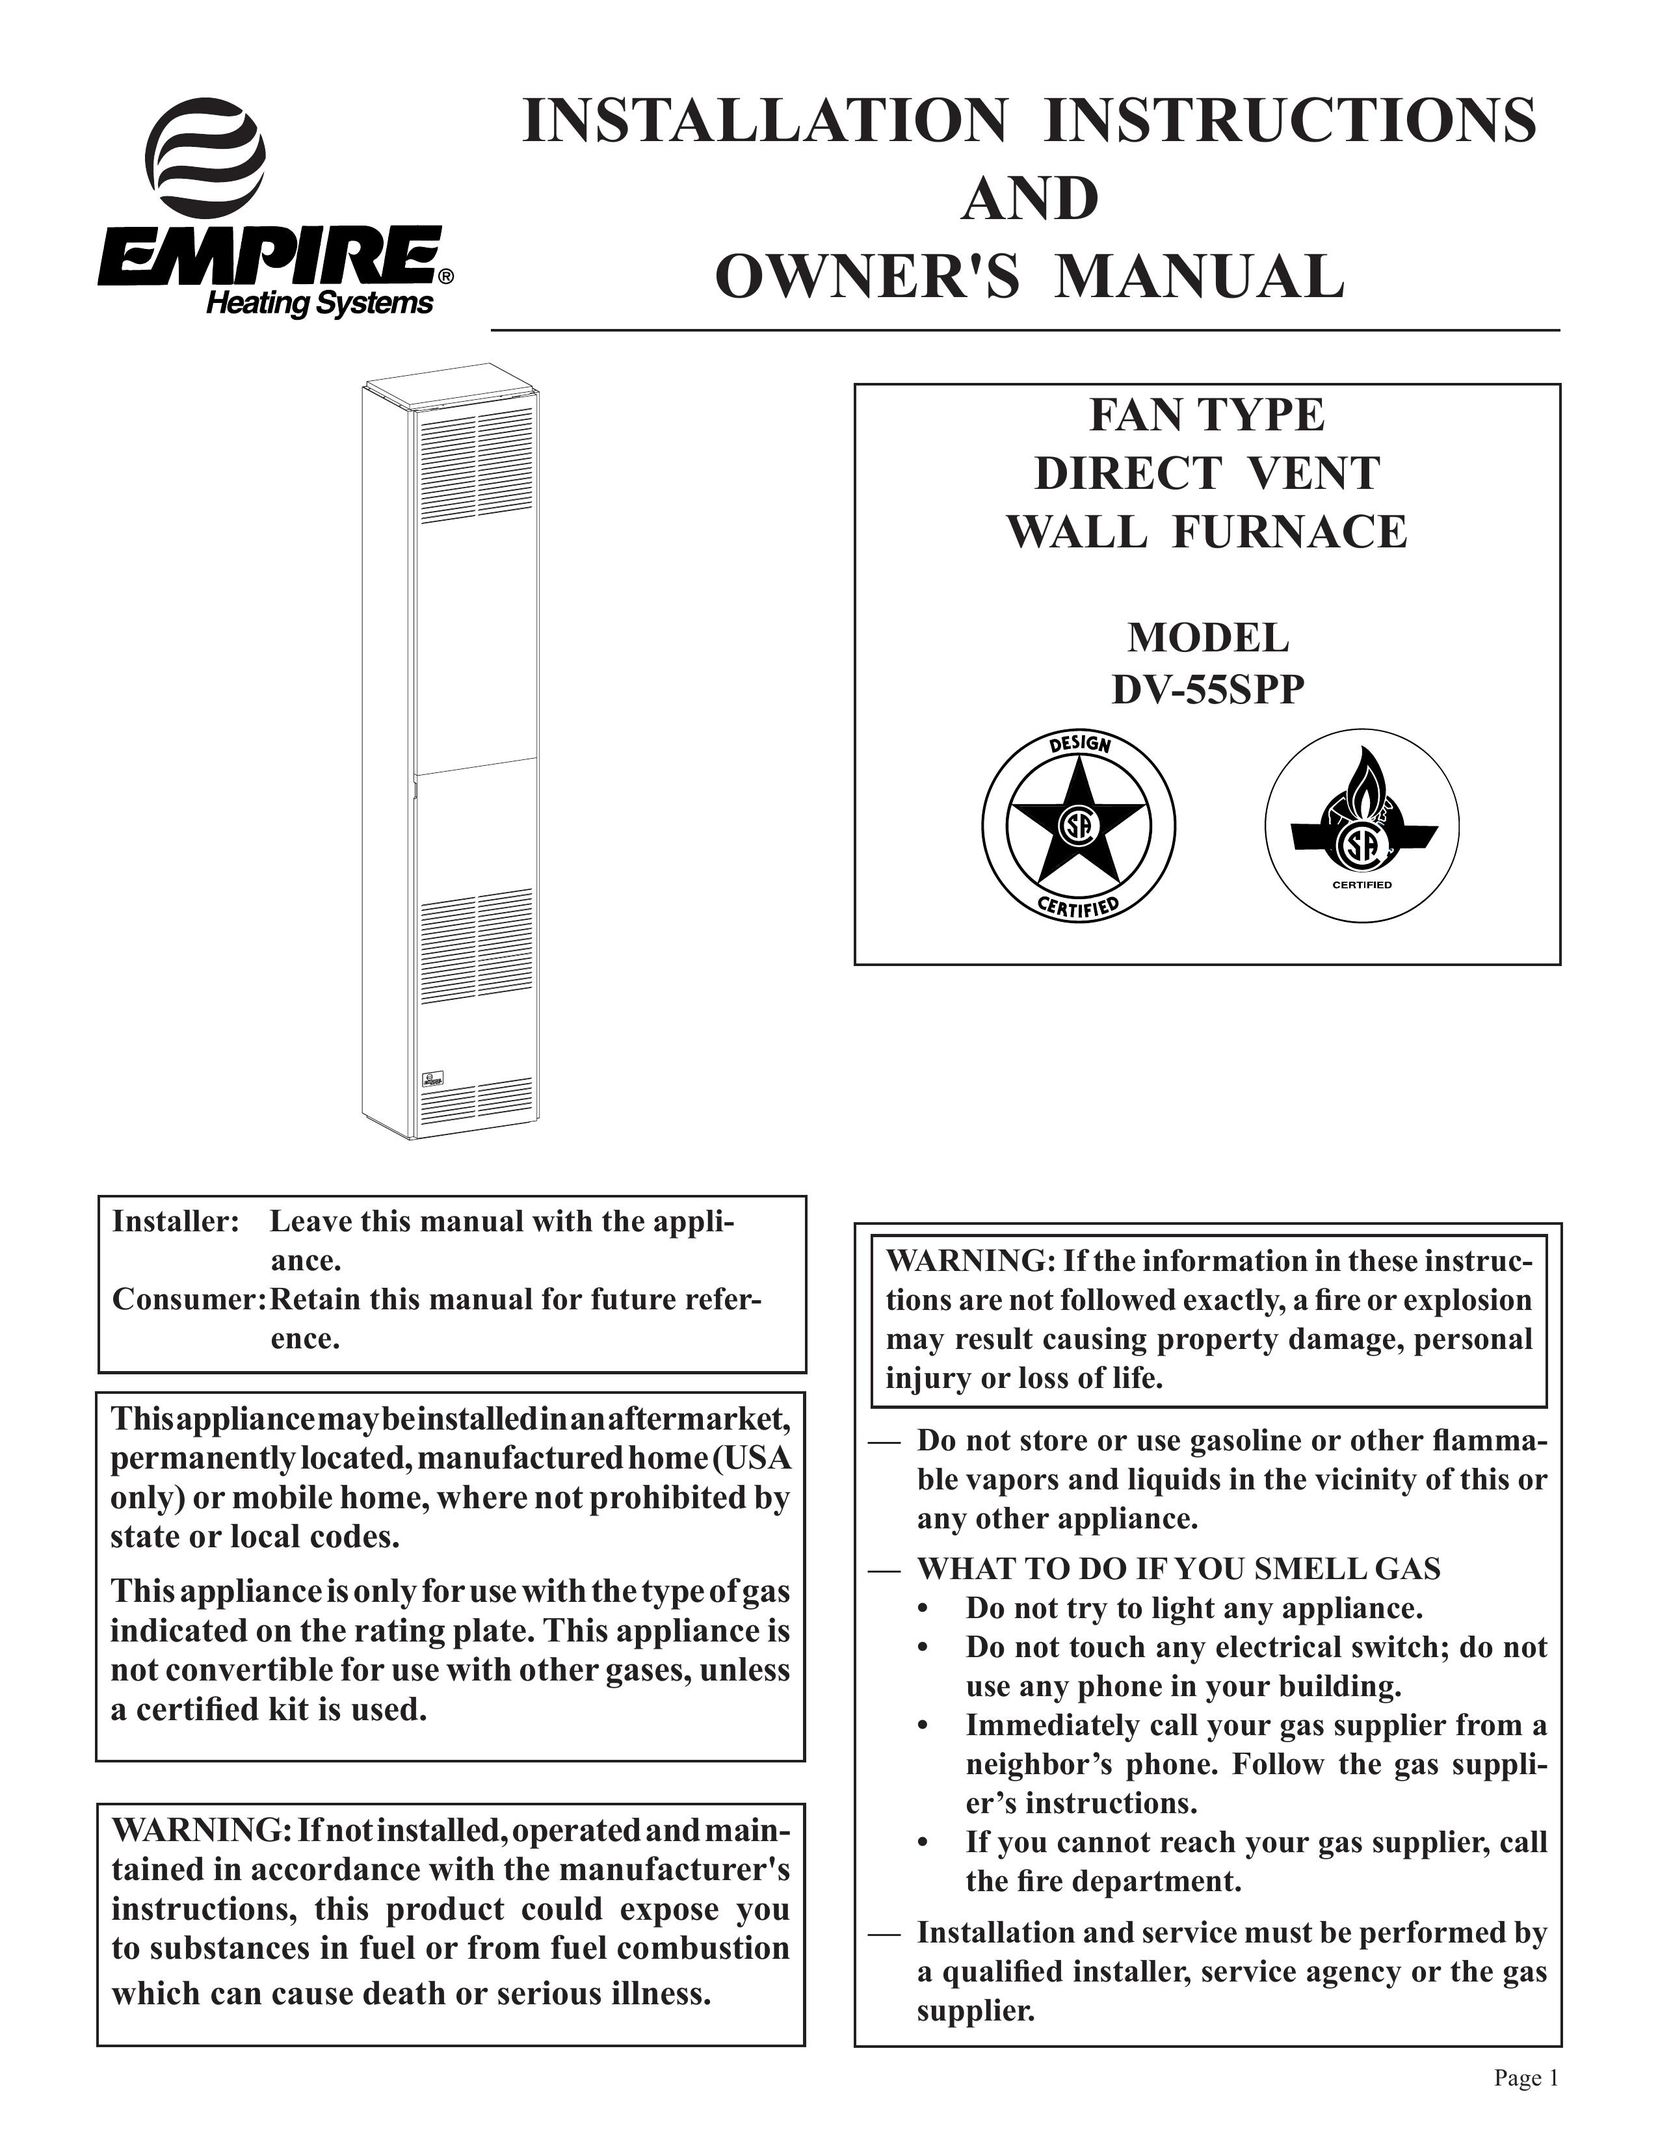 Empire Comfort Systems DV-55SPP Furnace User Manual